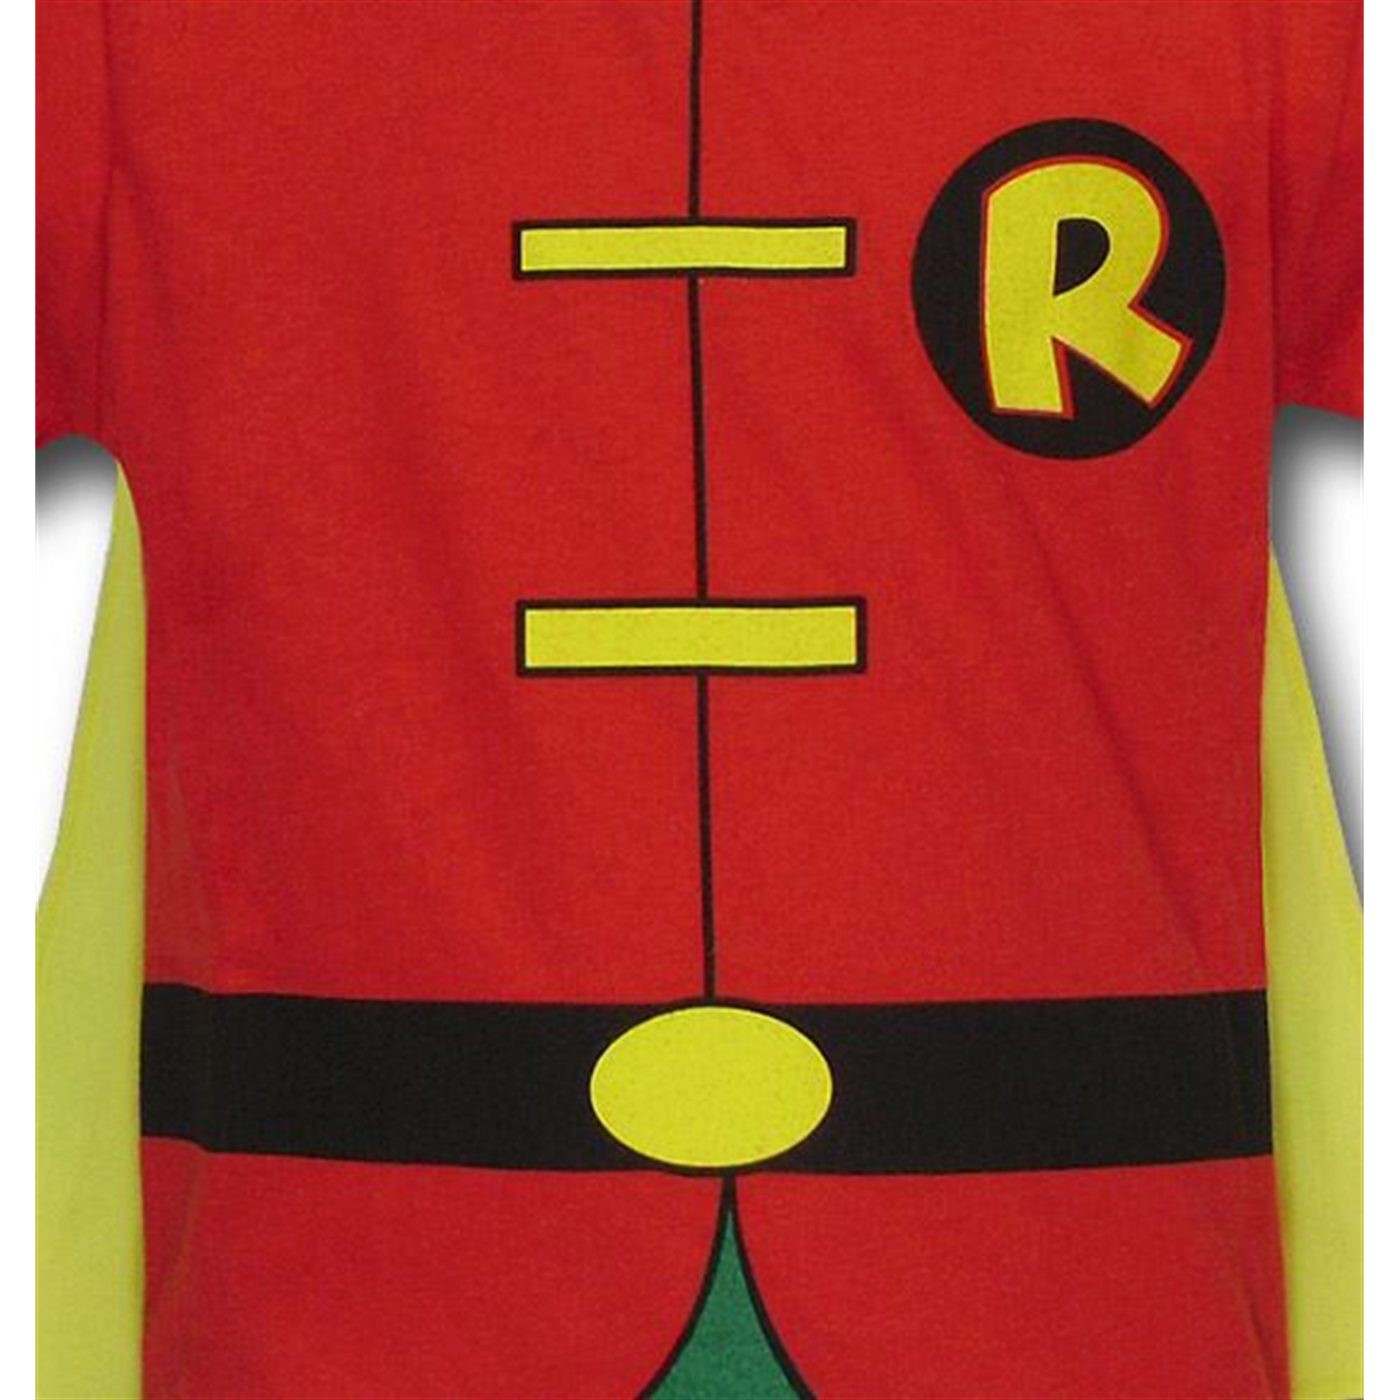 Robin Kids Costume Caped T-Shirt